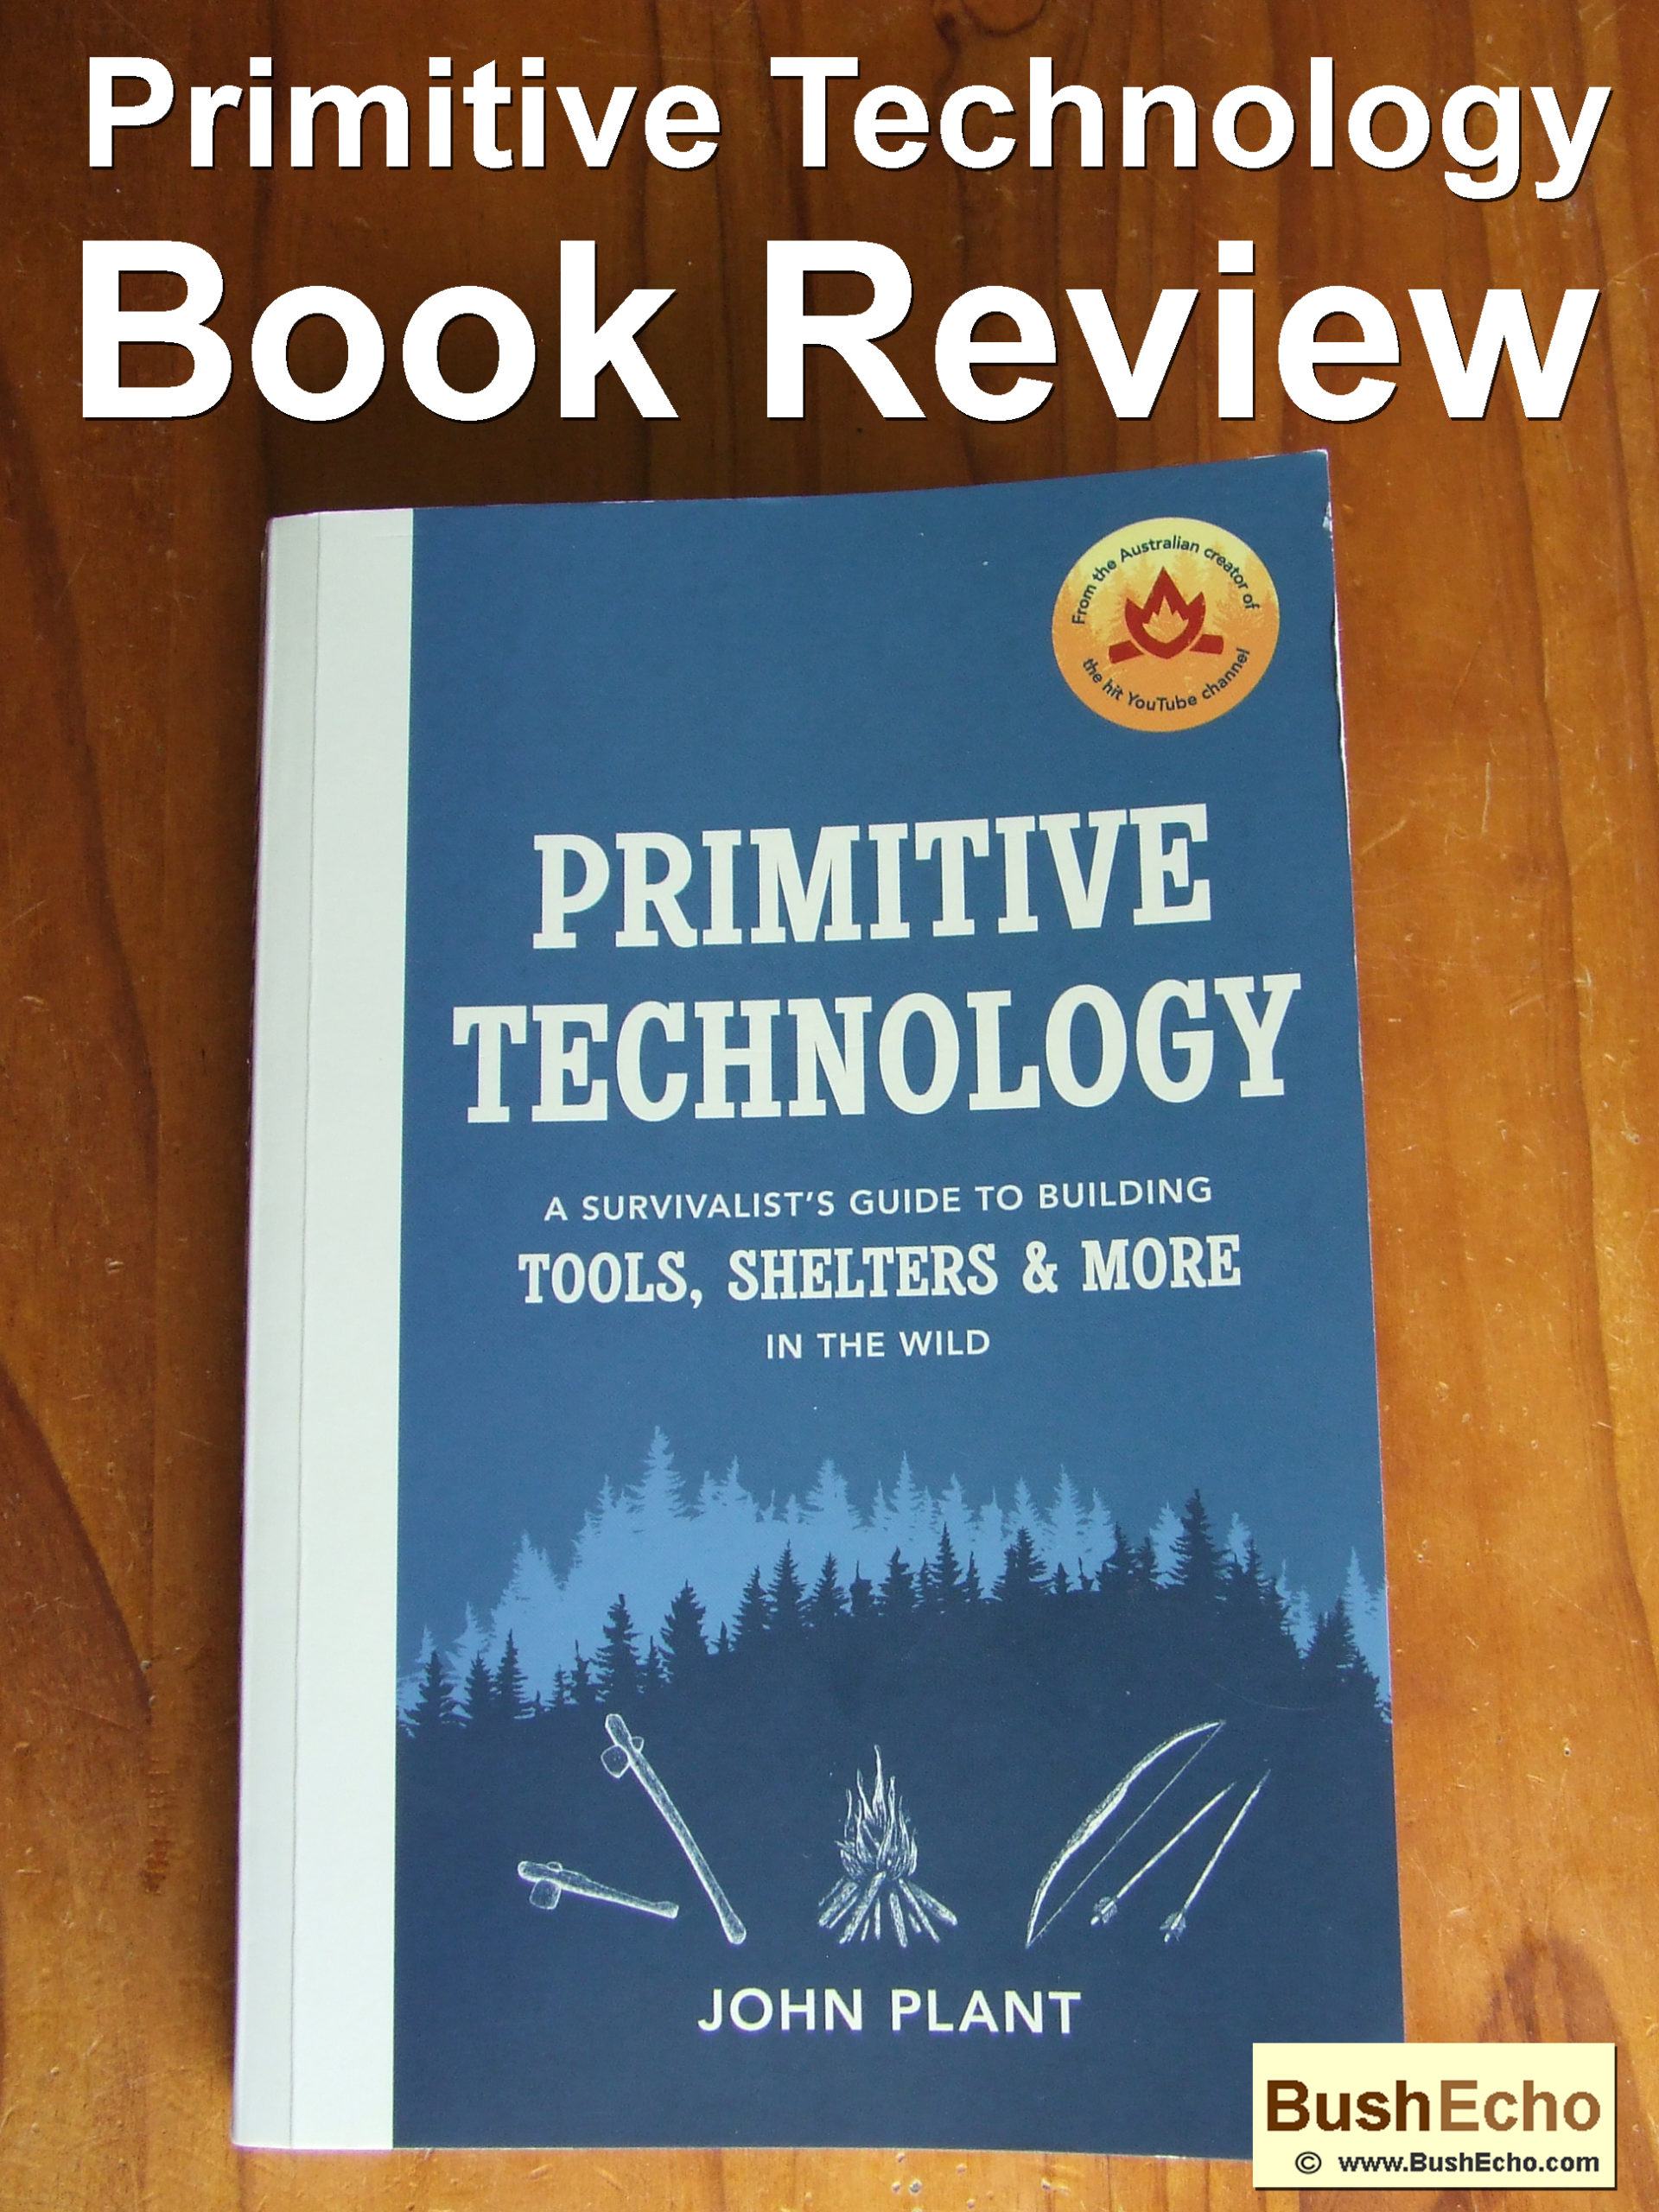 Primitive Technology book review